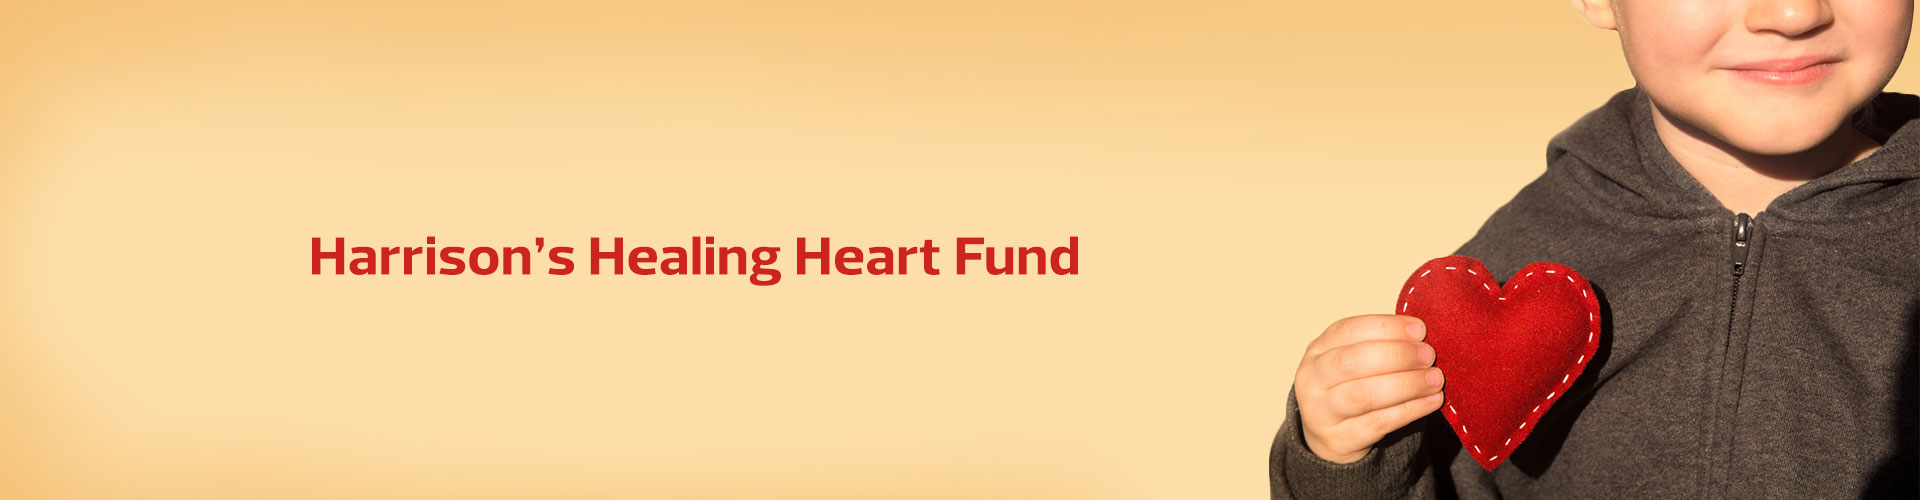 Harrison’s Healing Heart Fund